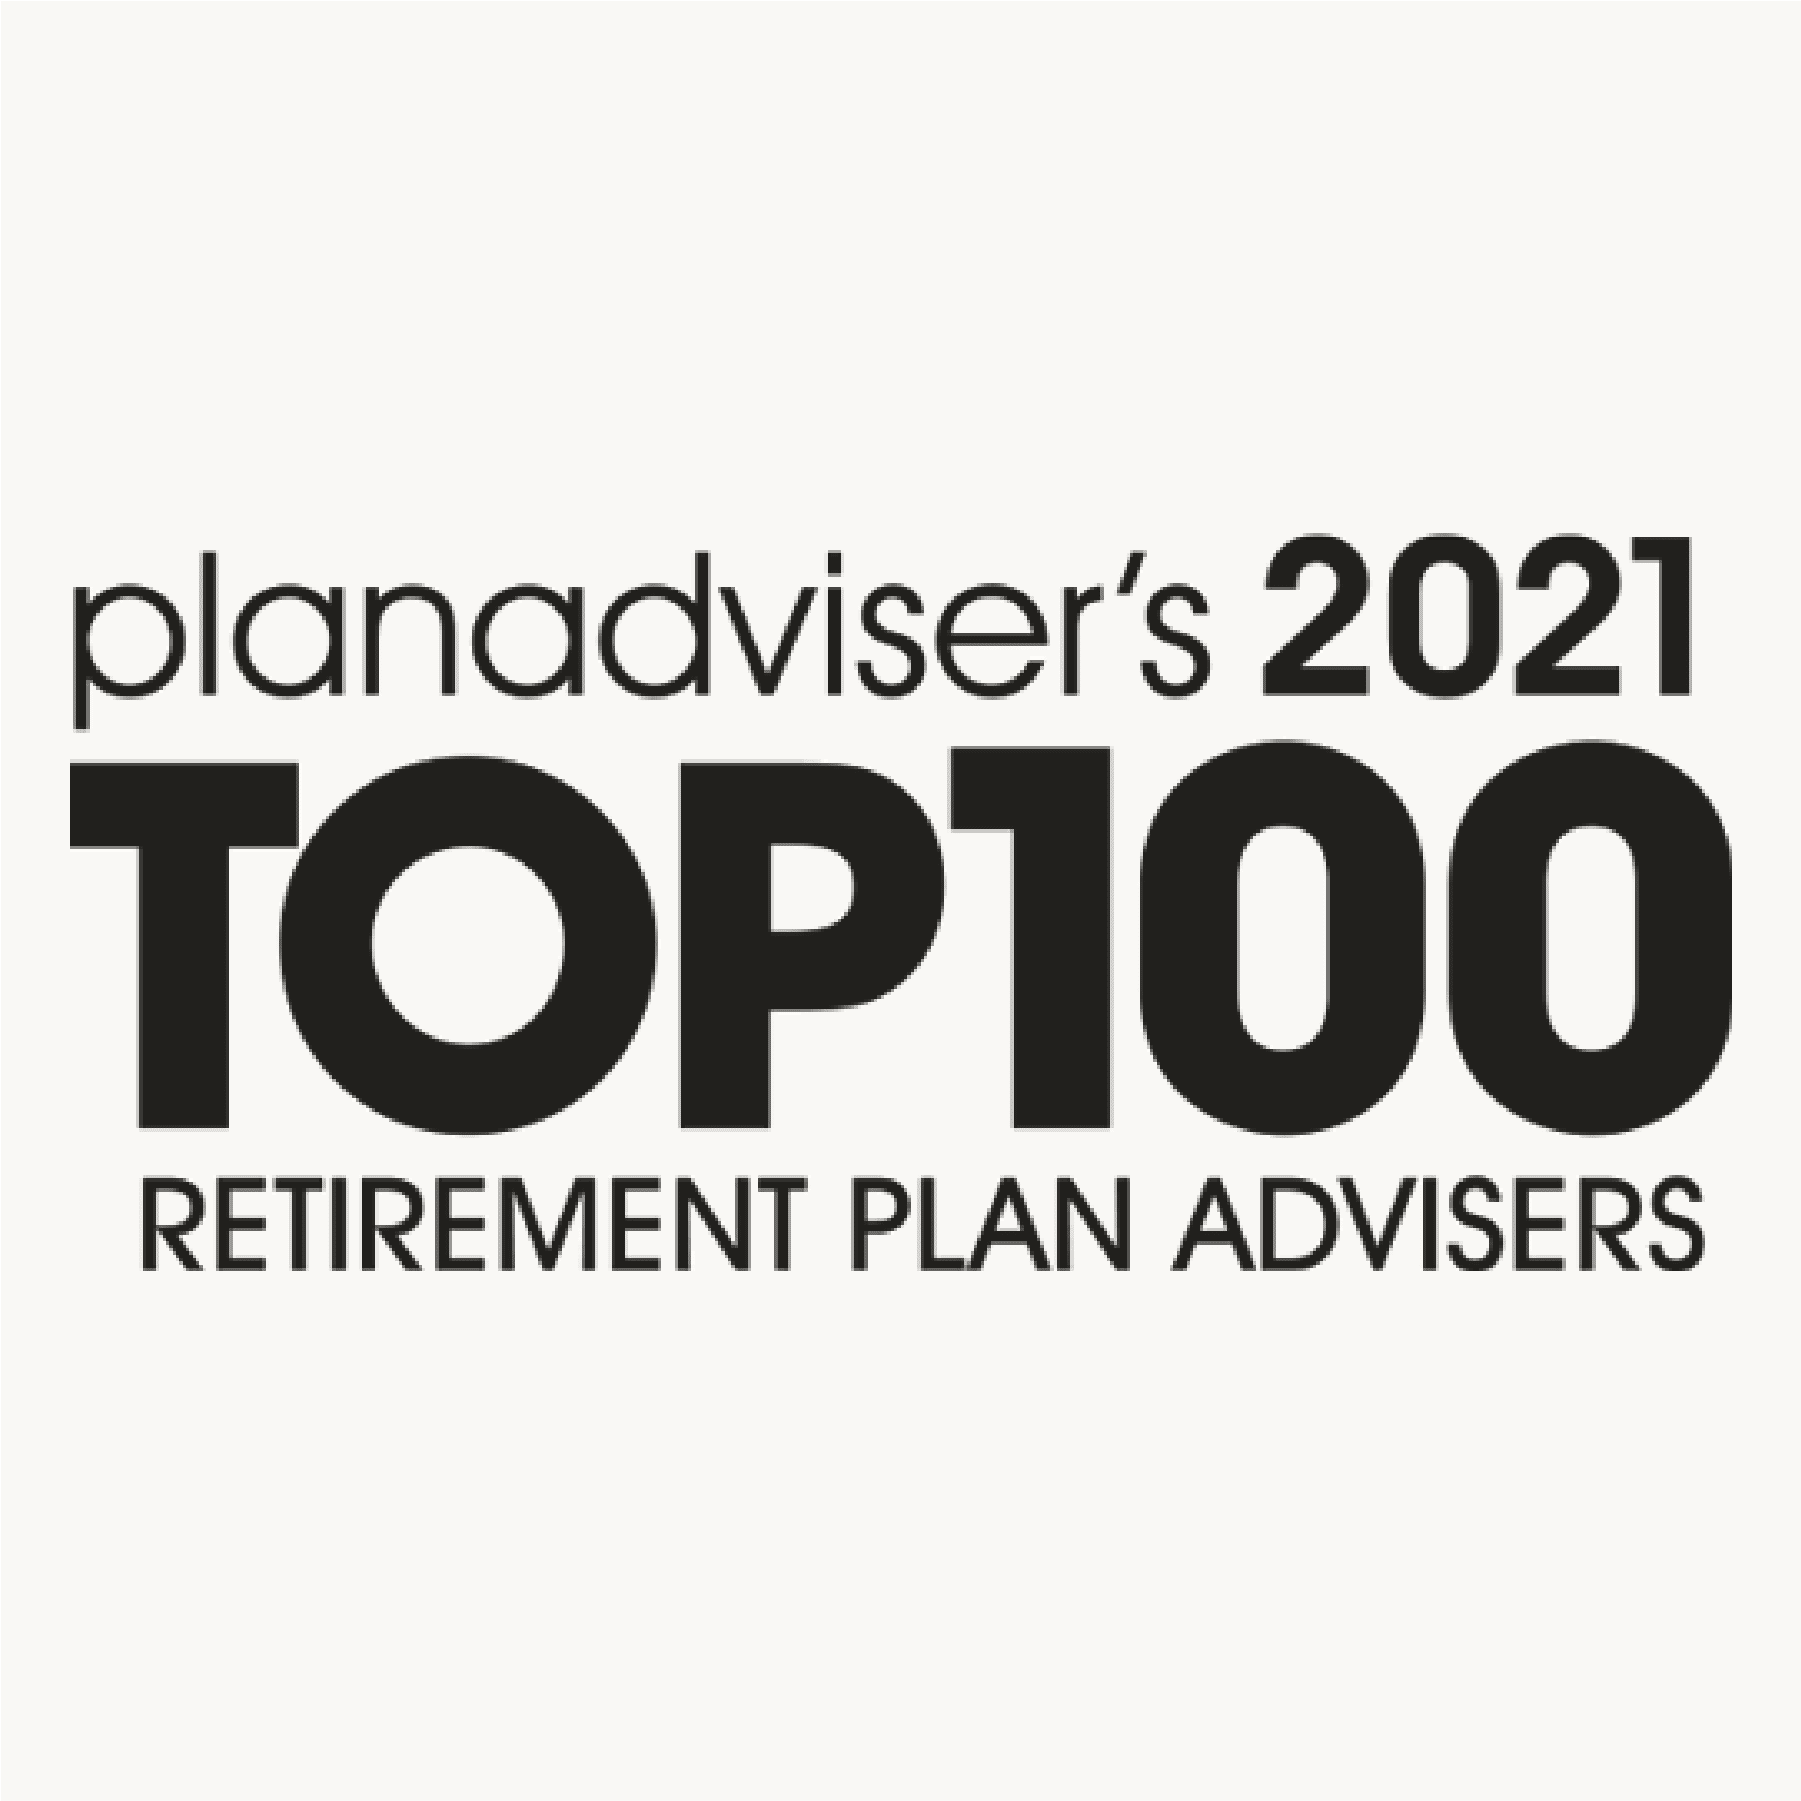 PlanAdvisor Top 100 Retirement Plan Advisers - 2021